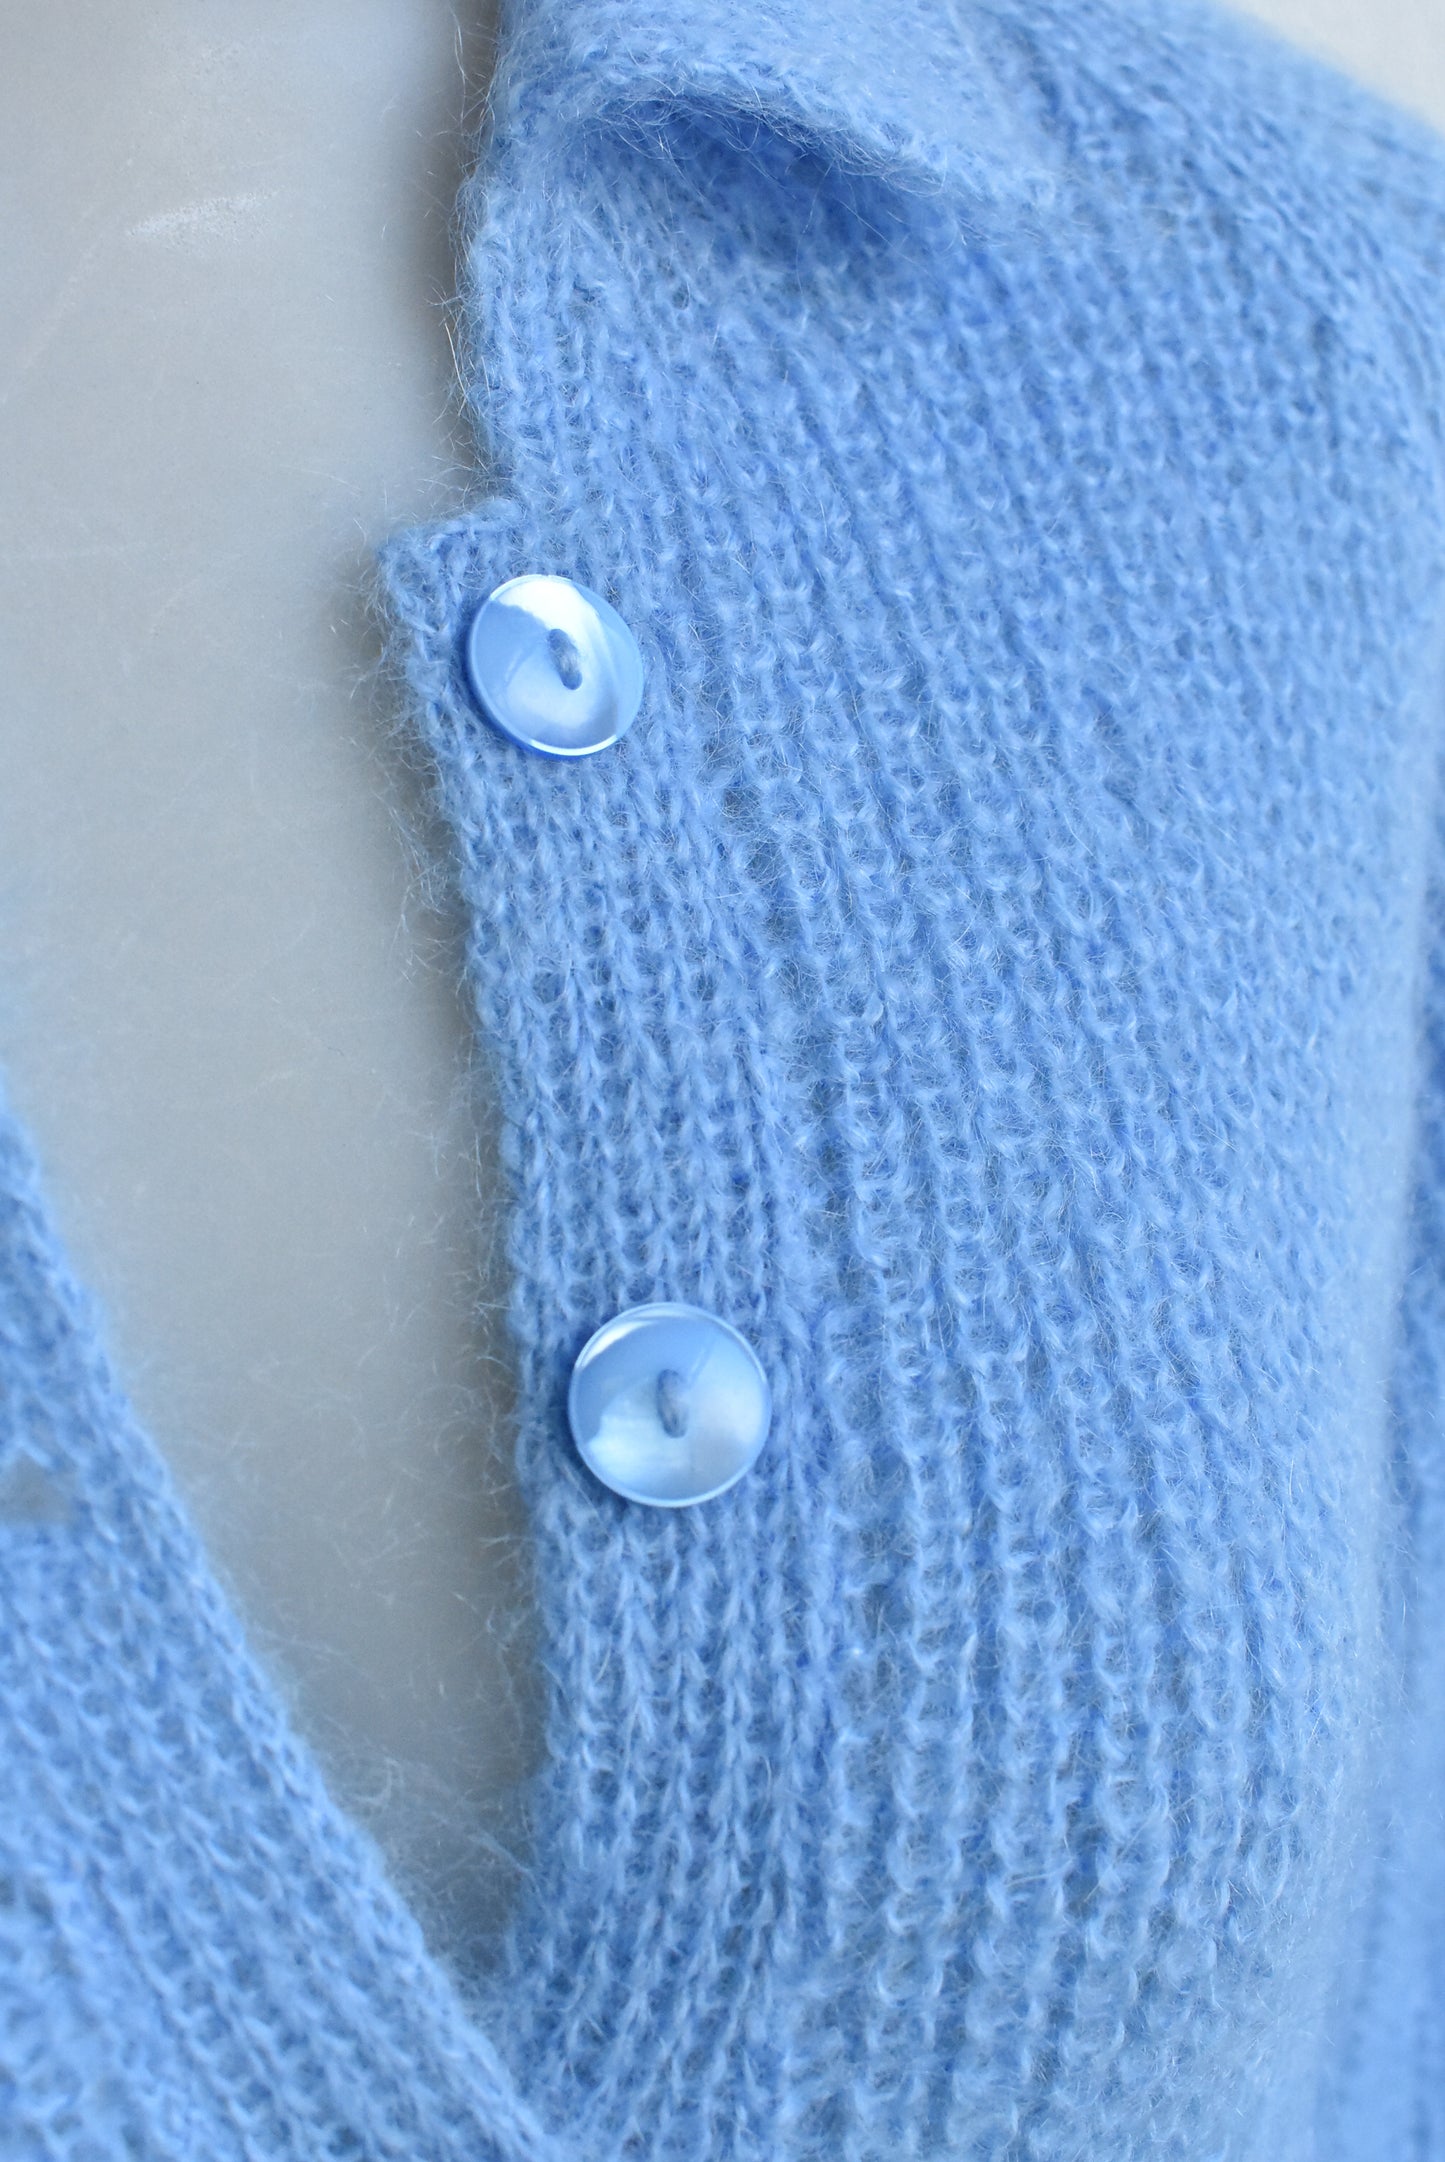 Blue knit cardigan, two pockets, S/M